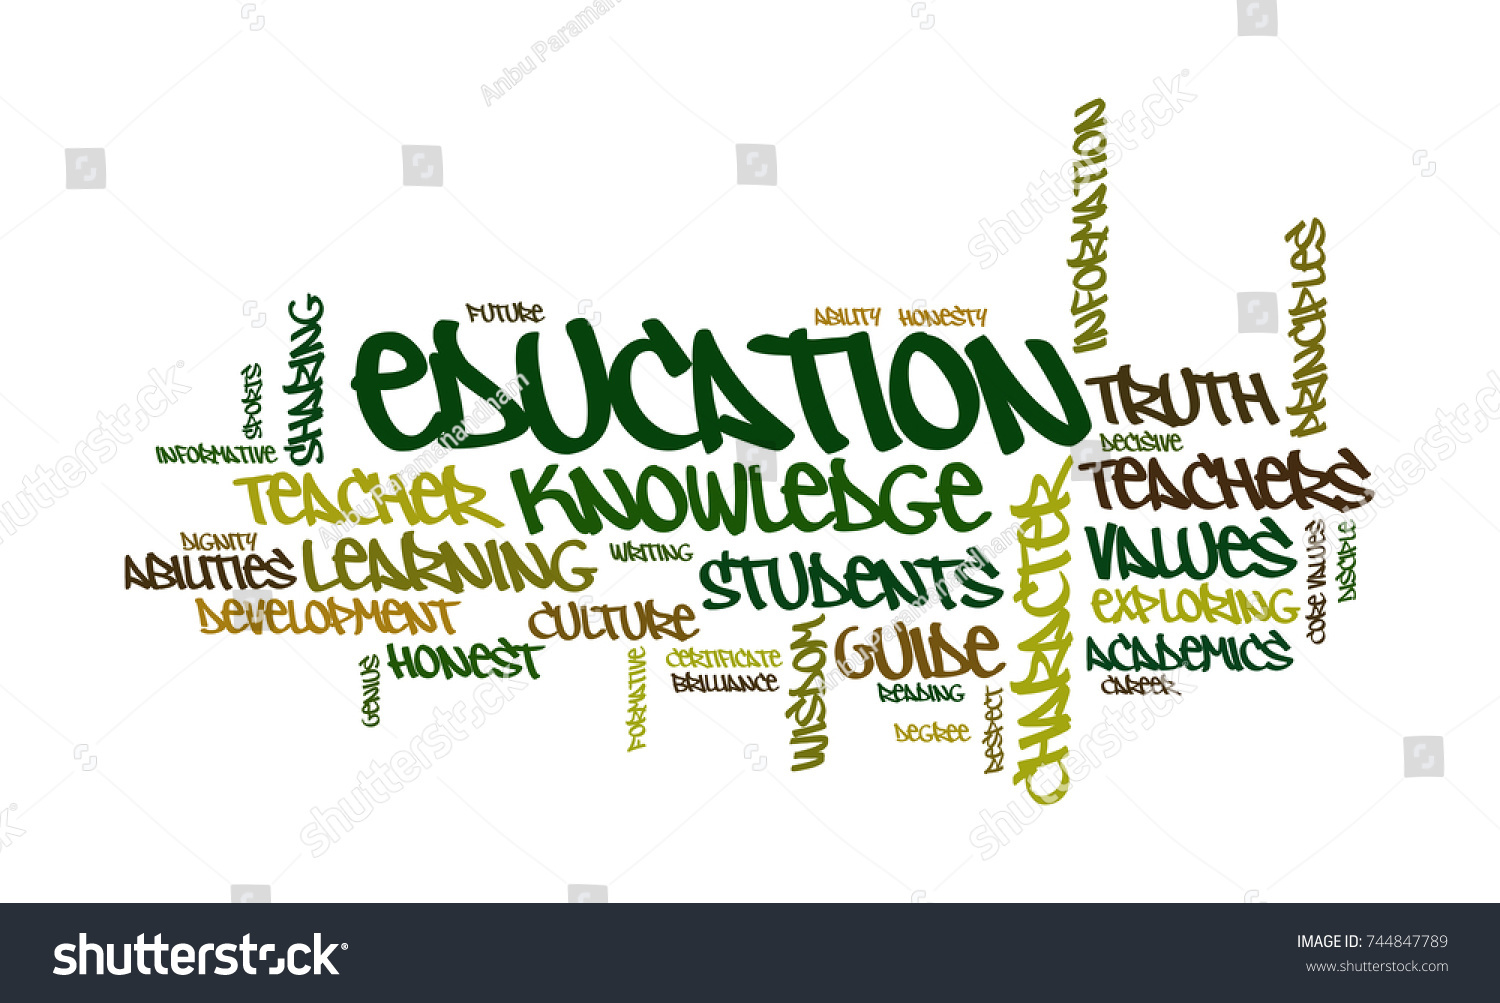 education-word-cloud-stock-illustration-744847789-shutterstock